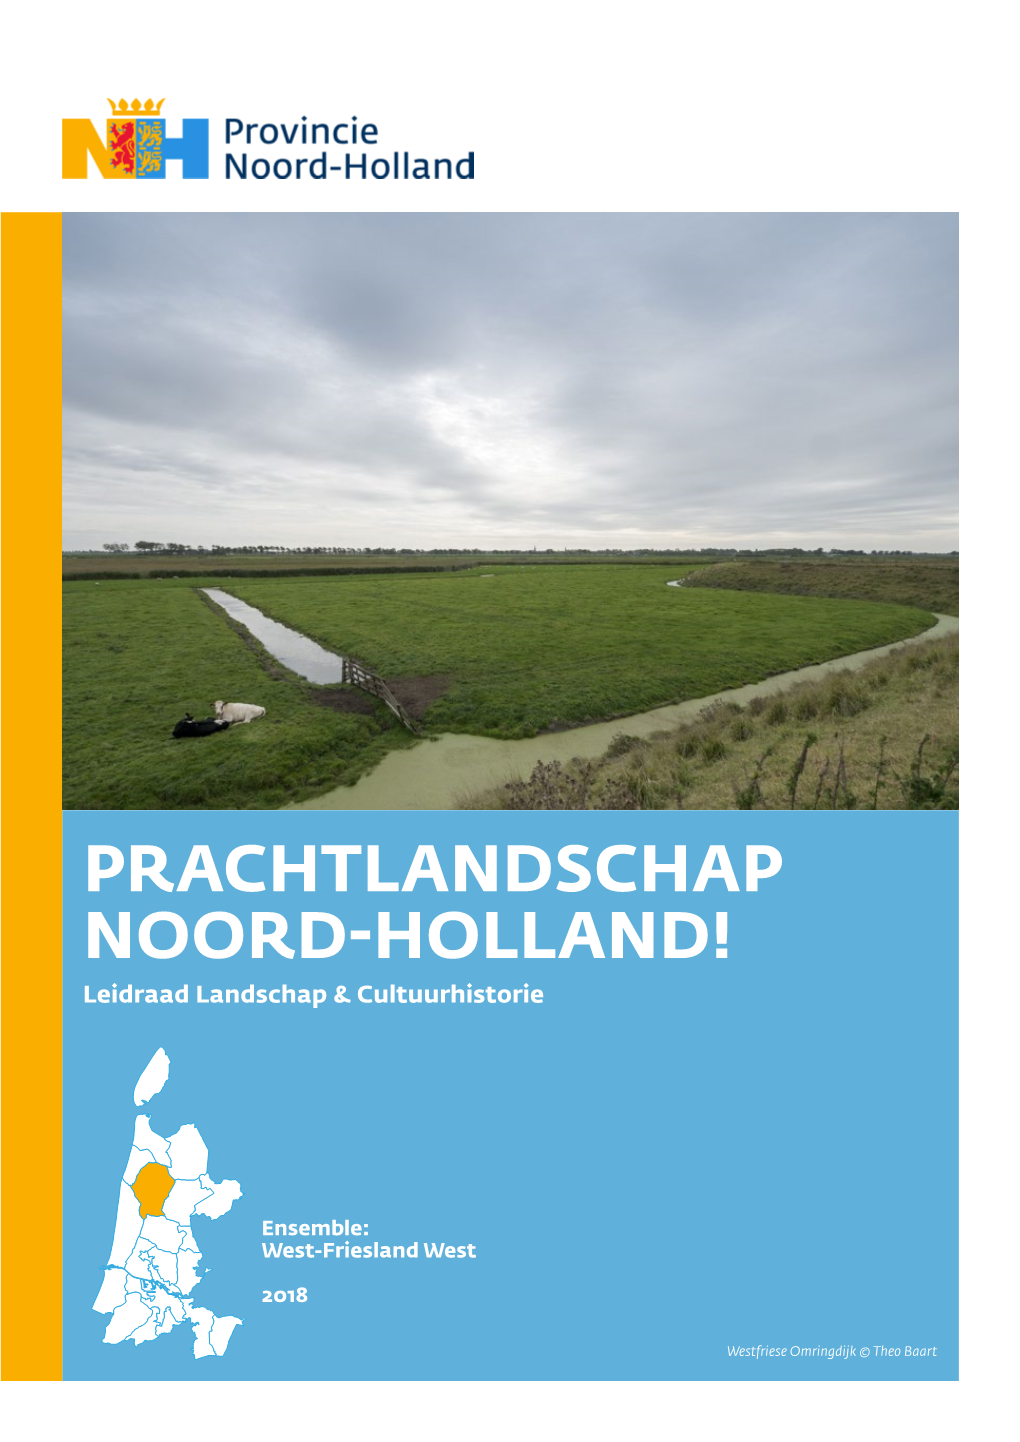 Download West-Friesland-West